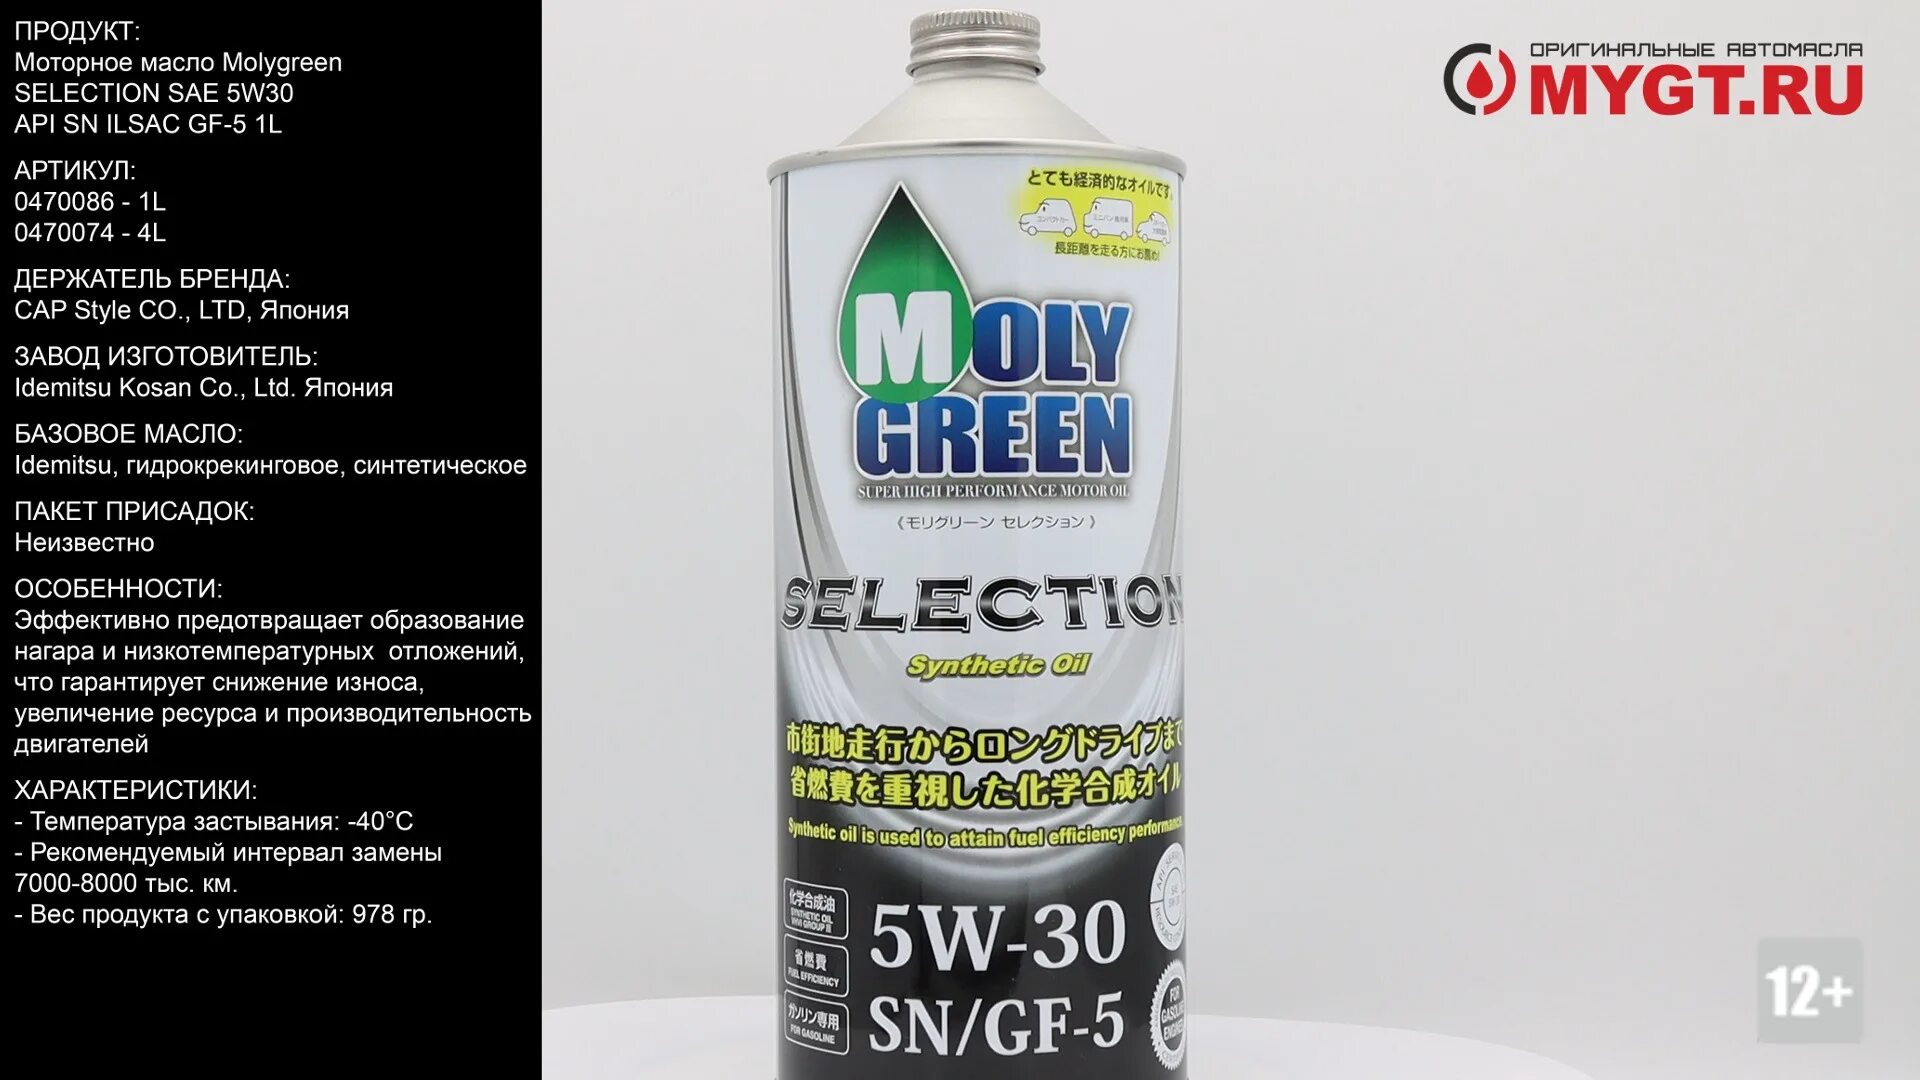 Moly моторное масло отзывы. Moly Green 5w30 selection. Масло Moly Green 5w30 selection. Moly Green selection 5w30 4л 0470074. Moly Green Premium Black SAE 5w-30 API SN ILSAC gf-5 4l 0470022.